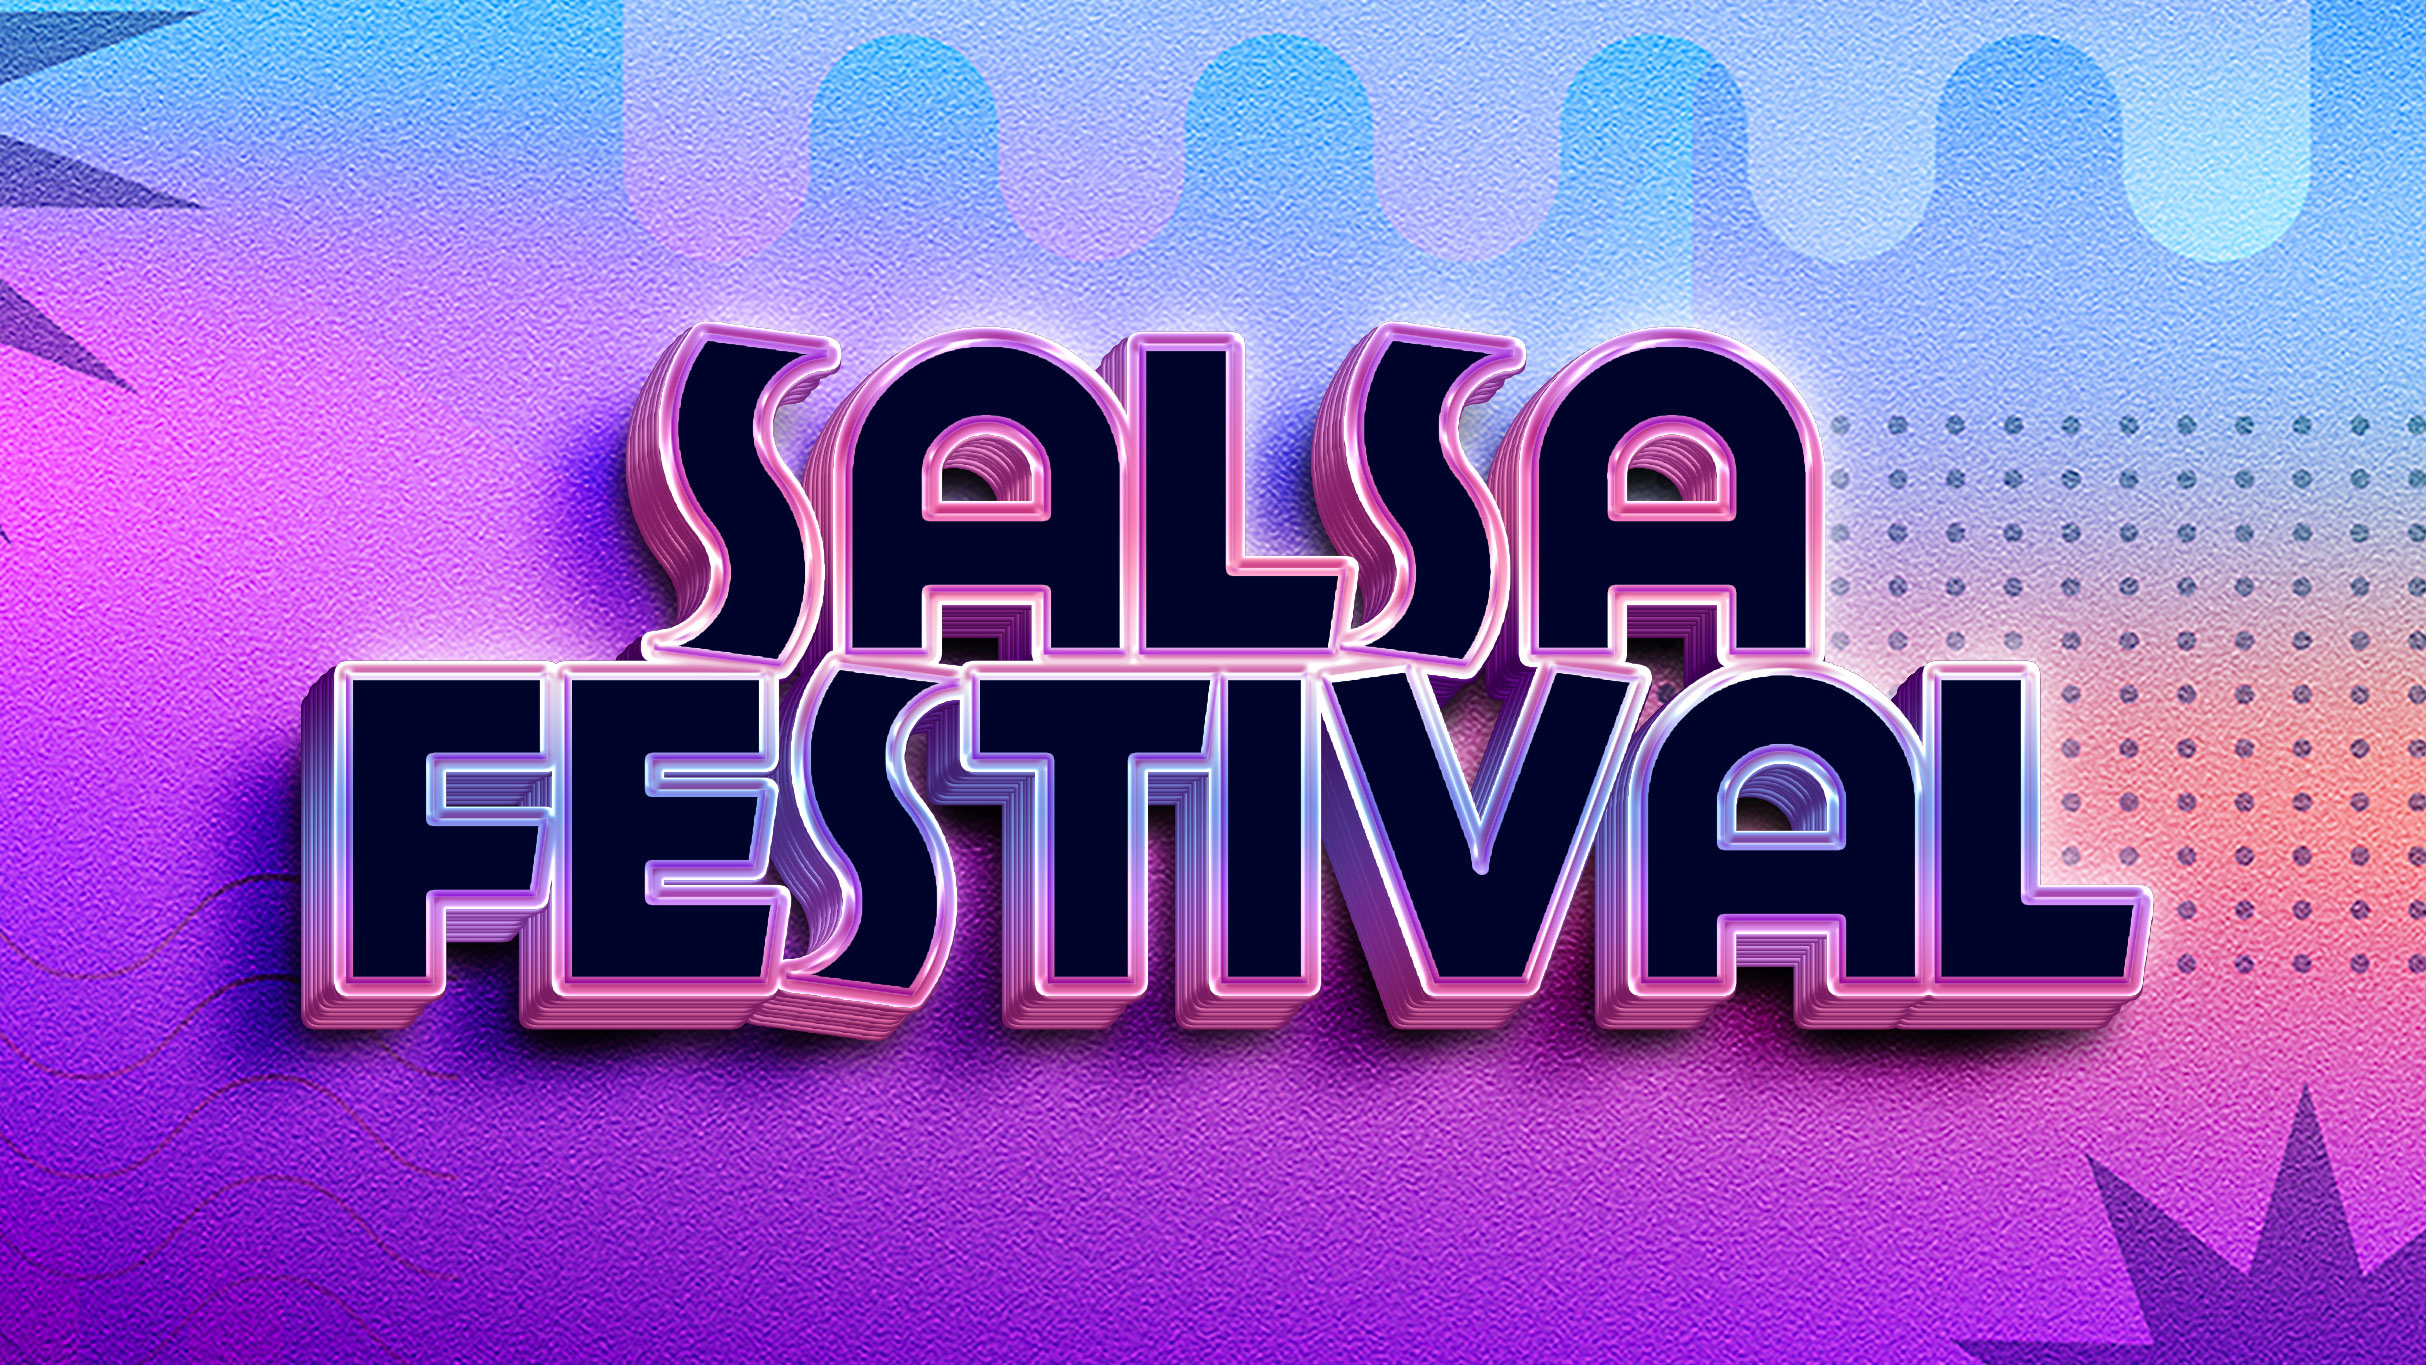 The New York Salsa Festival